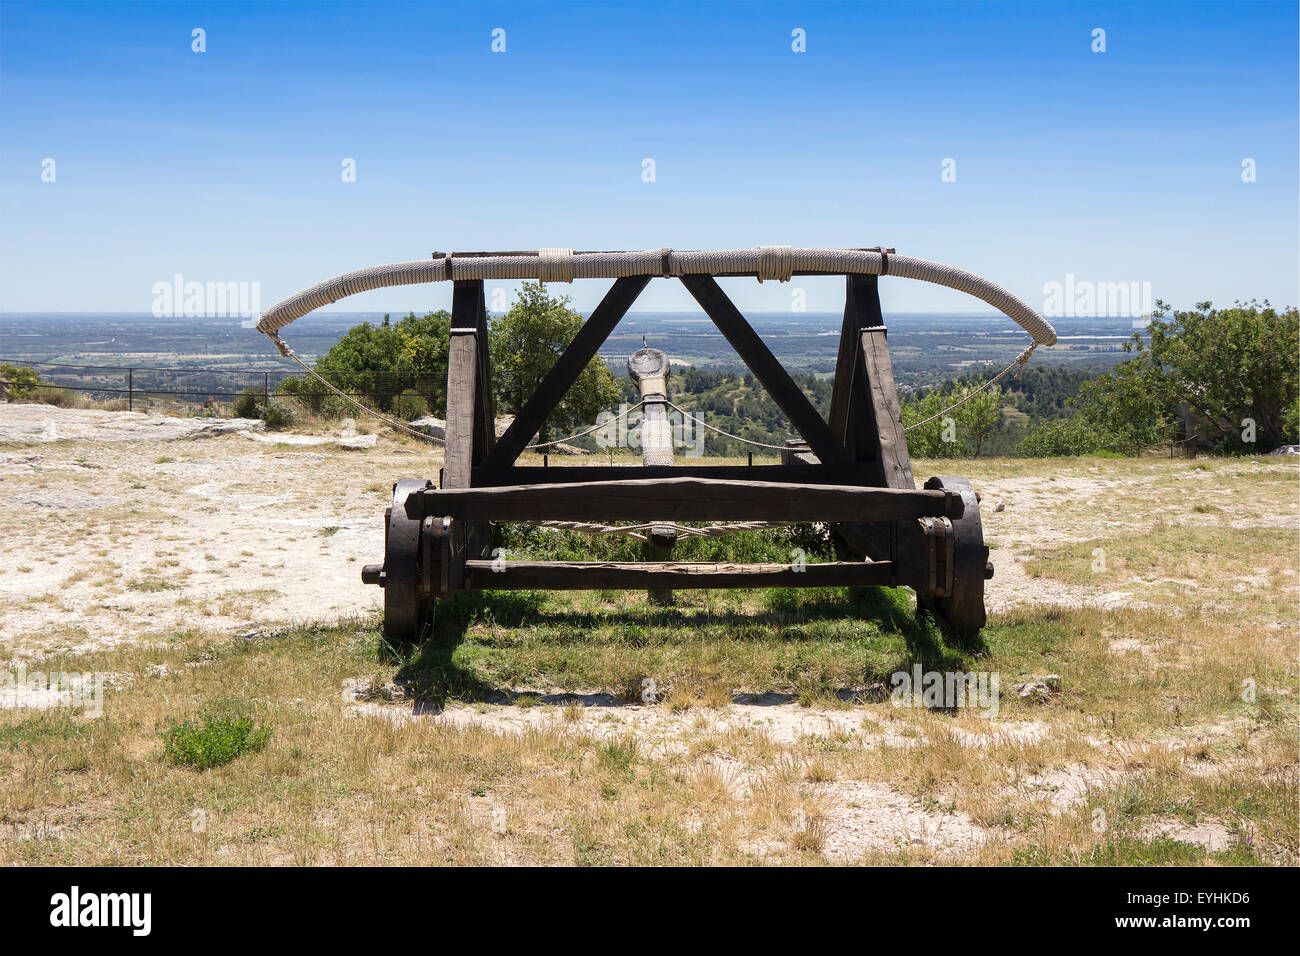 Old wooden medieval catapult at Les Baux de Provence, France Stock Photo